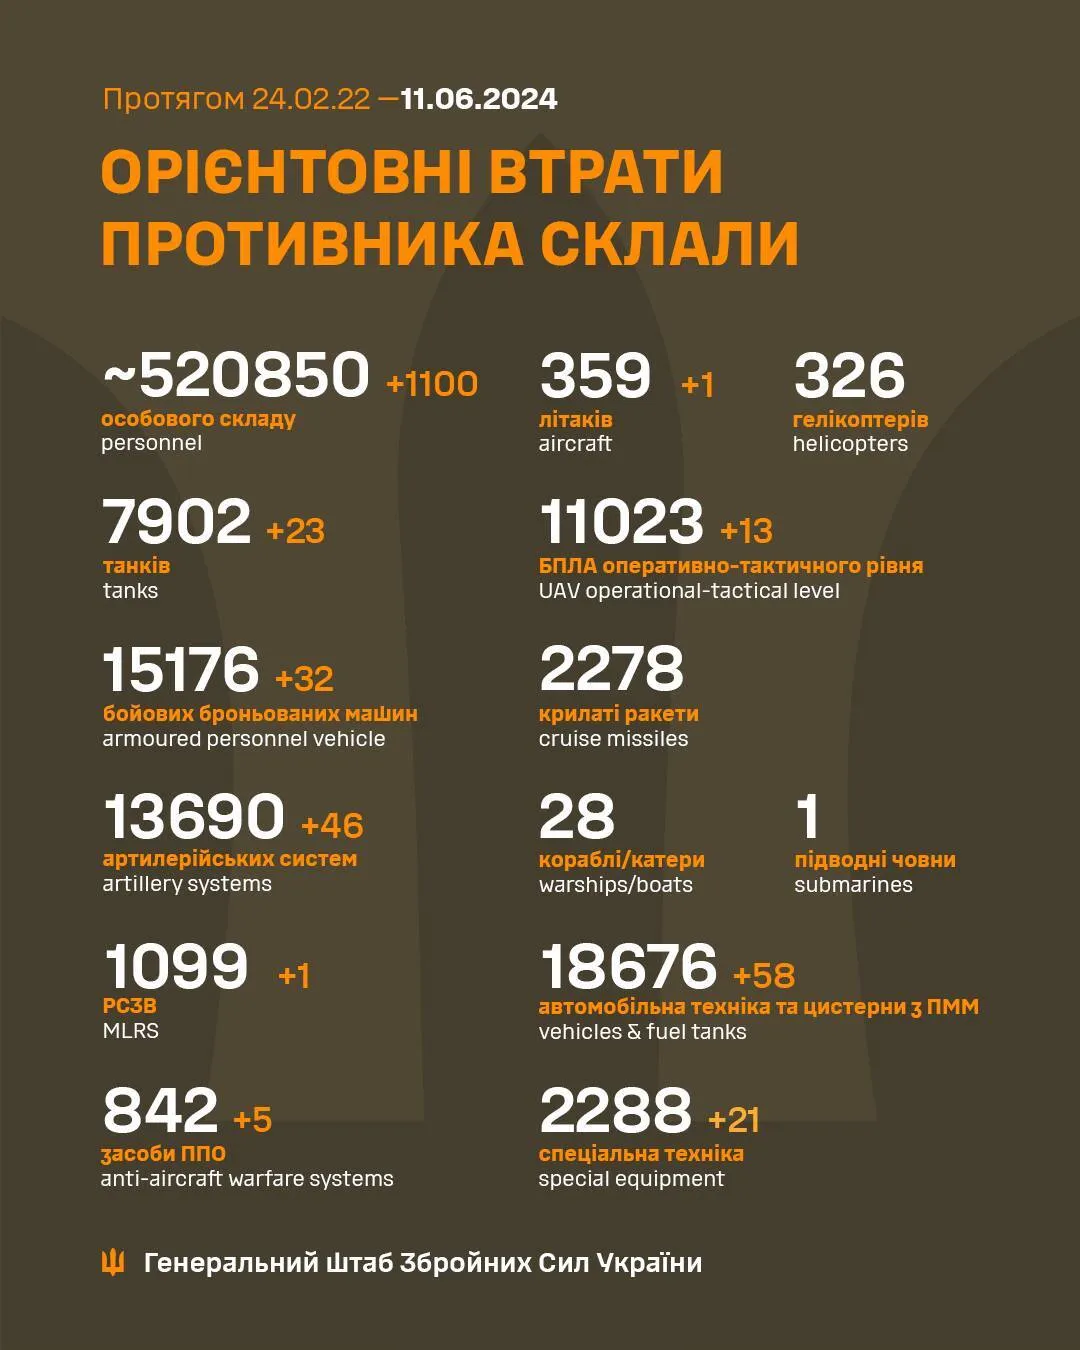 Минус самолет, 32 ББМ и 1100 оккупантов: Генштаб озвучил потери РФ за сутки